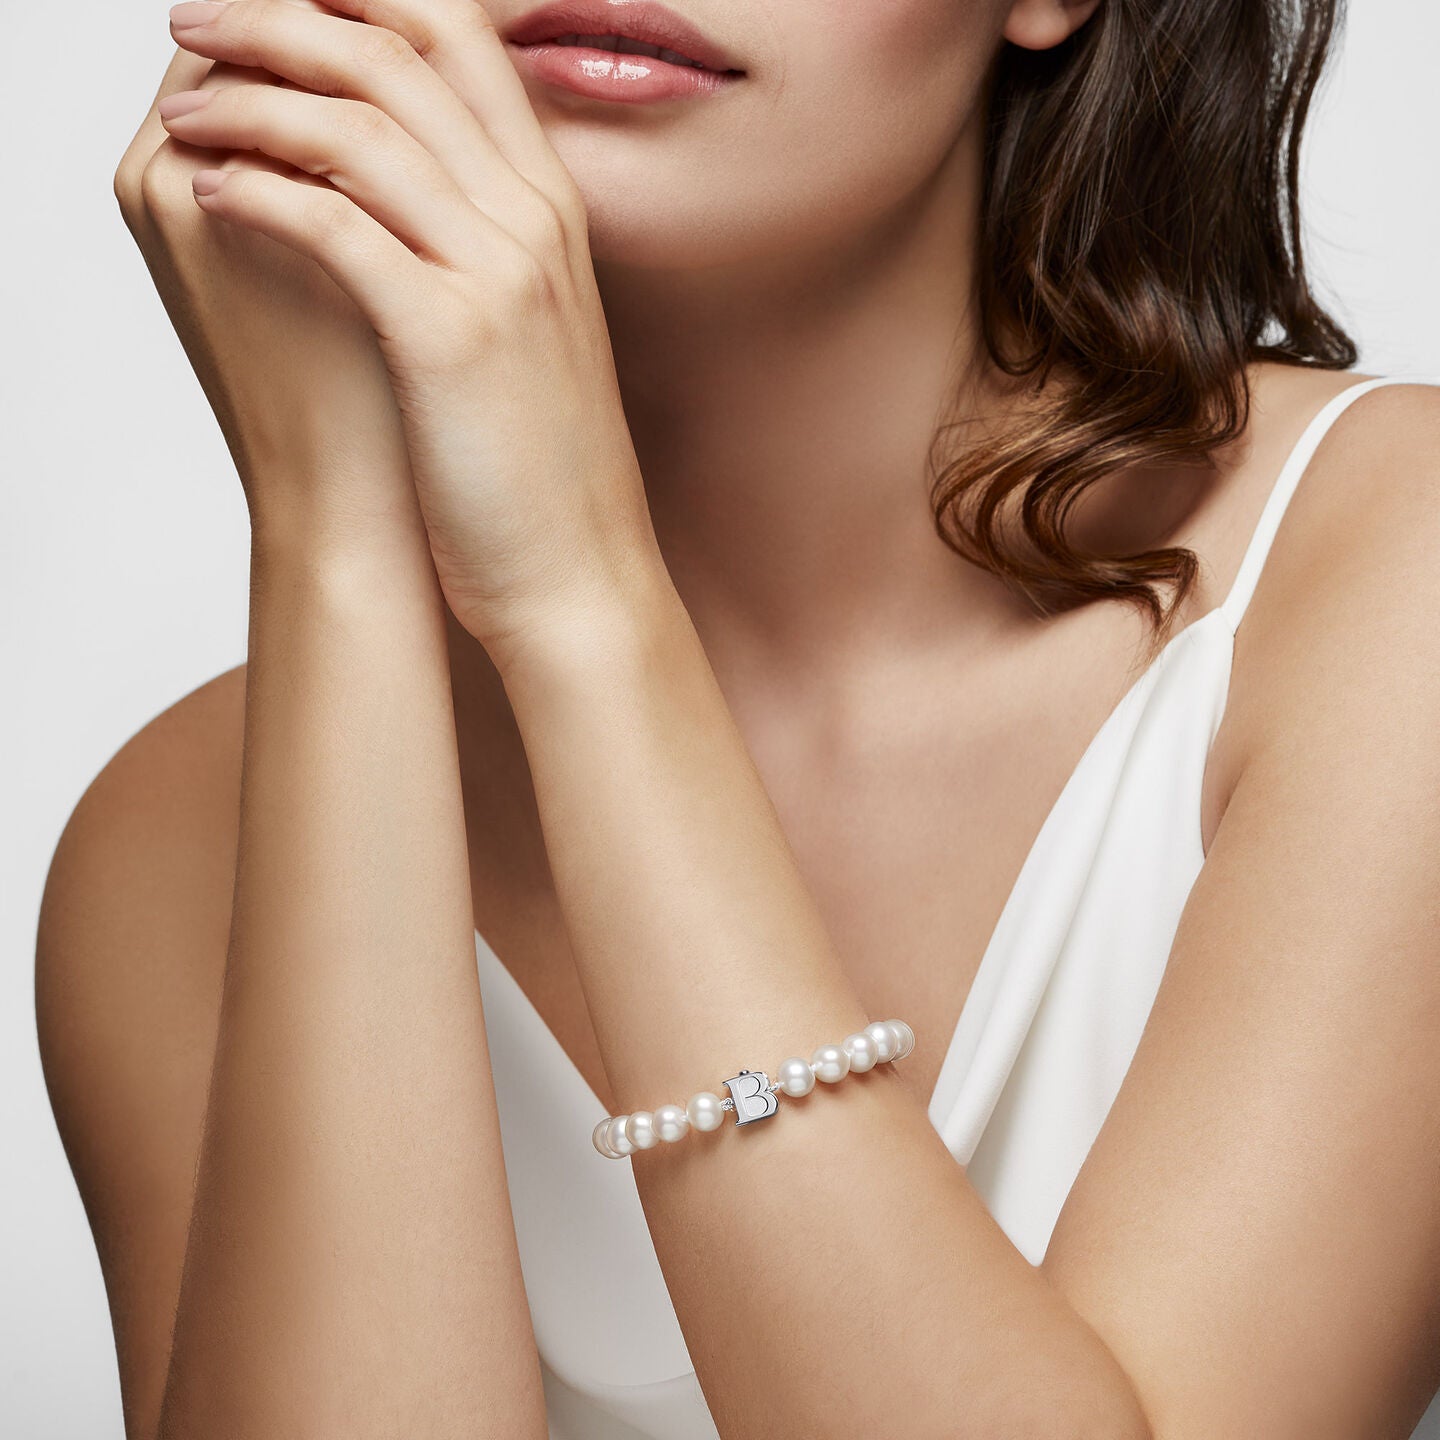 Birks Pearls 7.5-8 mm Silver Cultured Freshwater Pearl Bracelet 450017311567